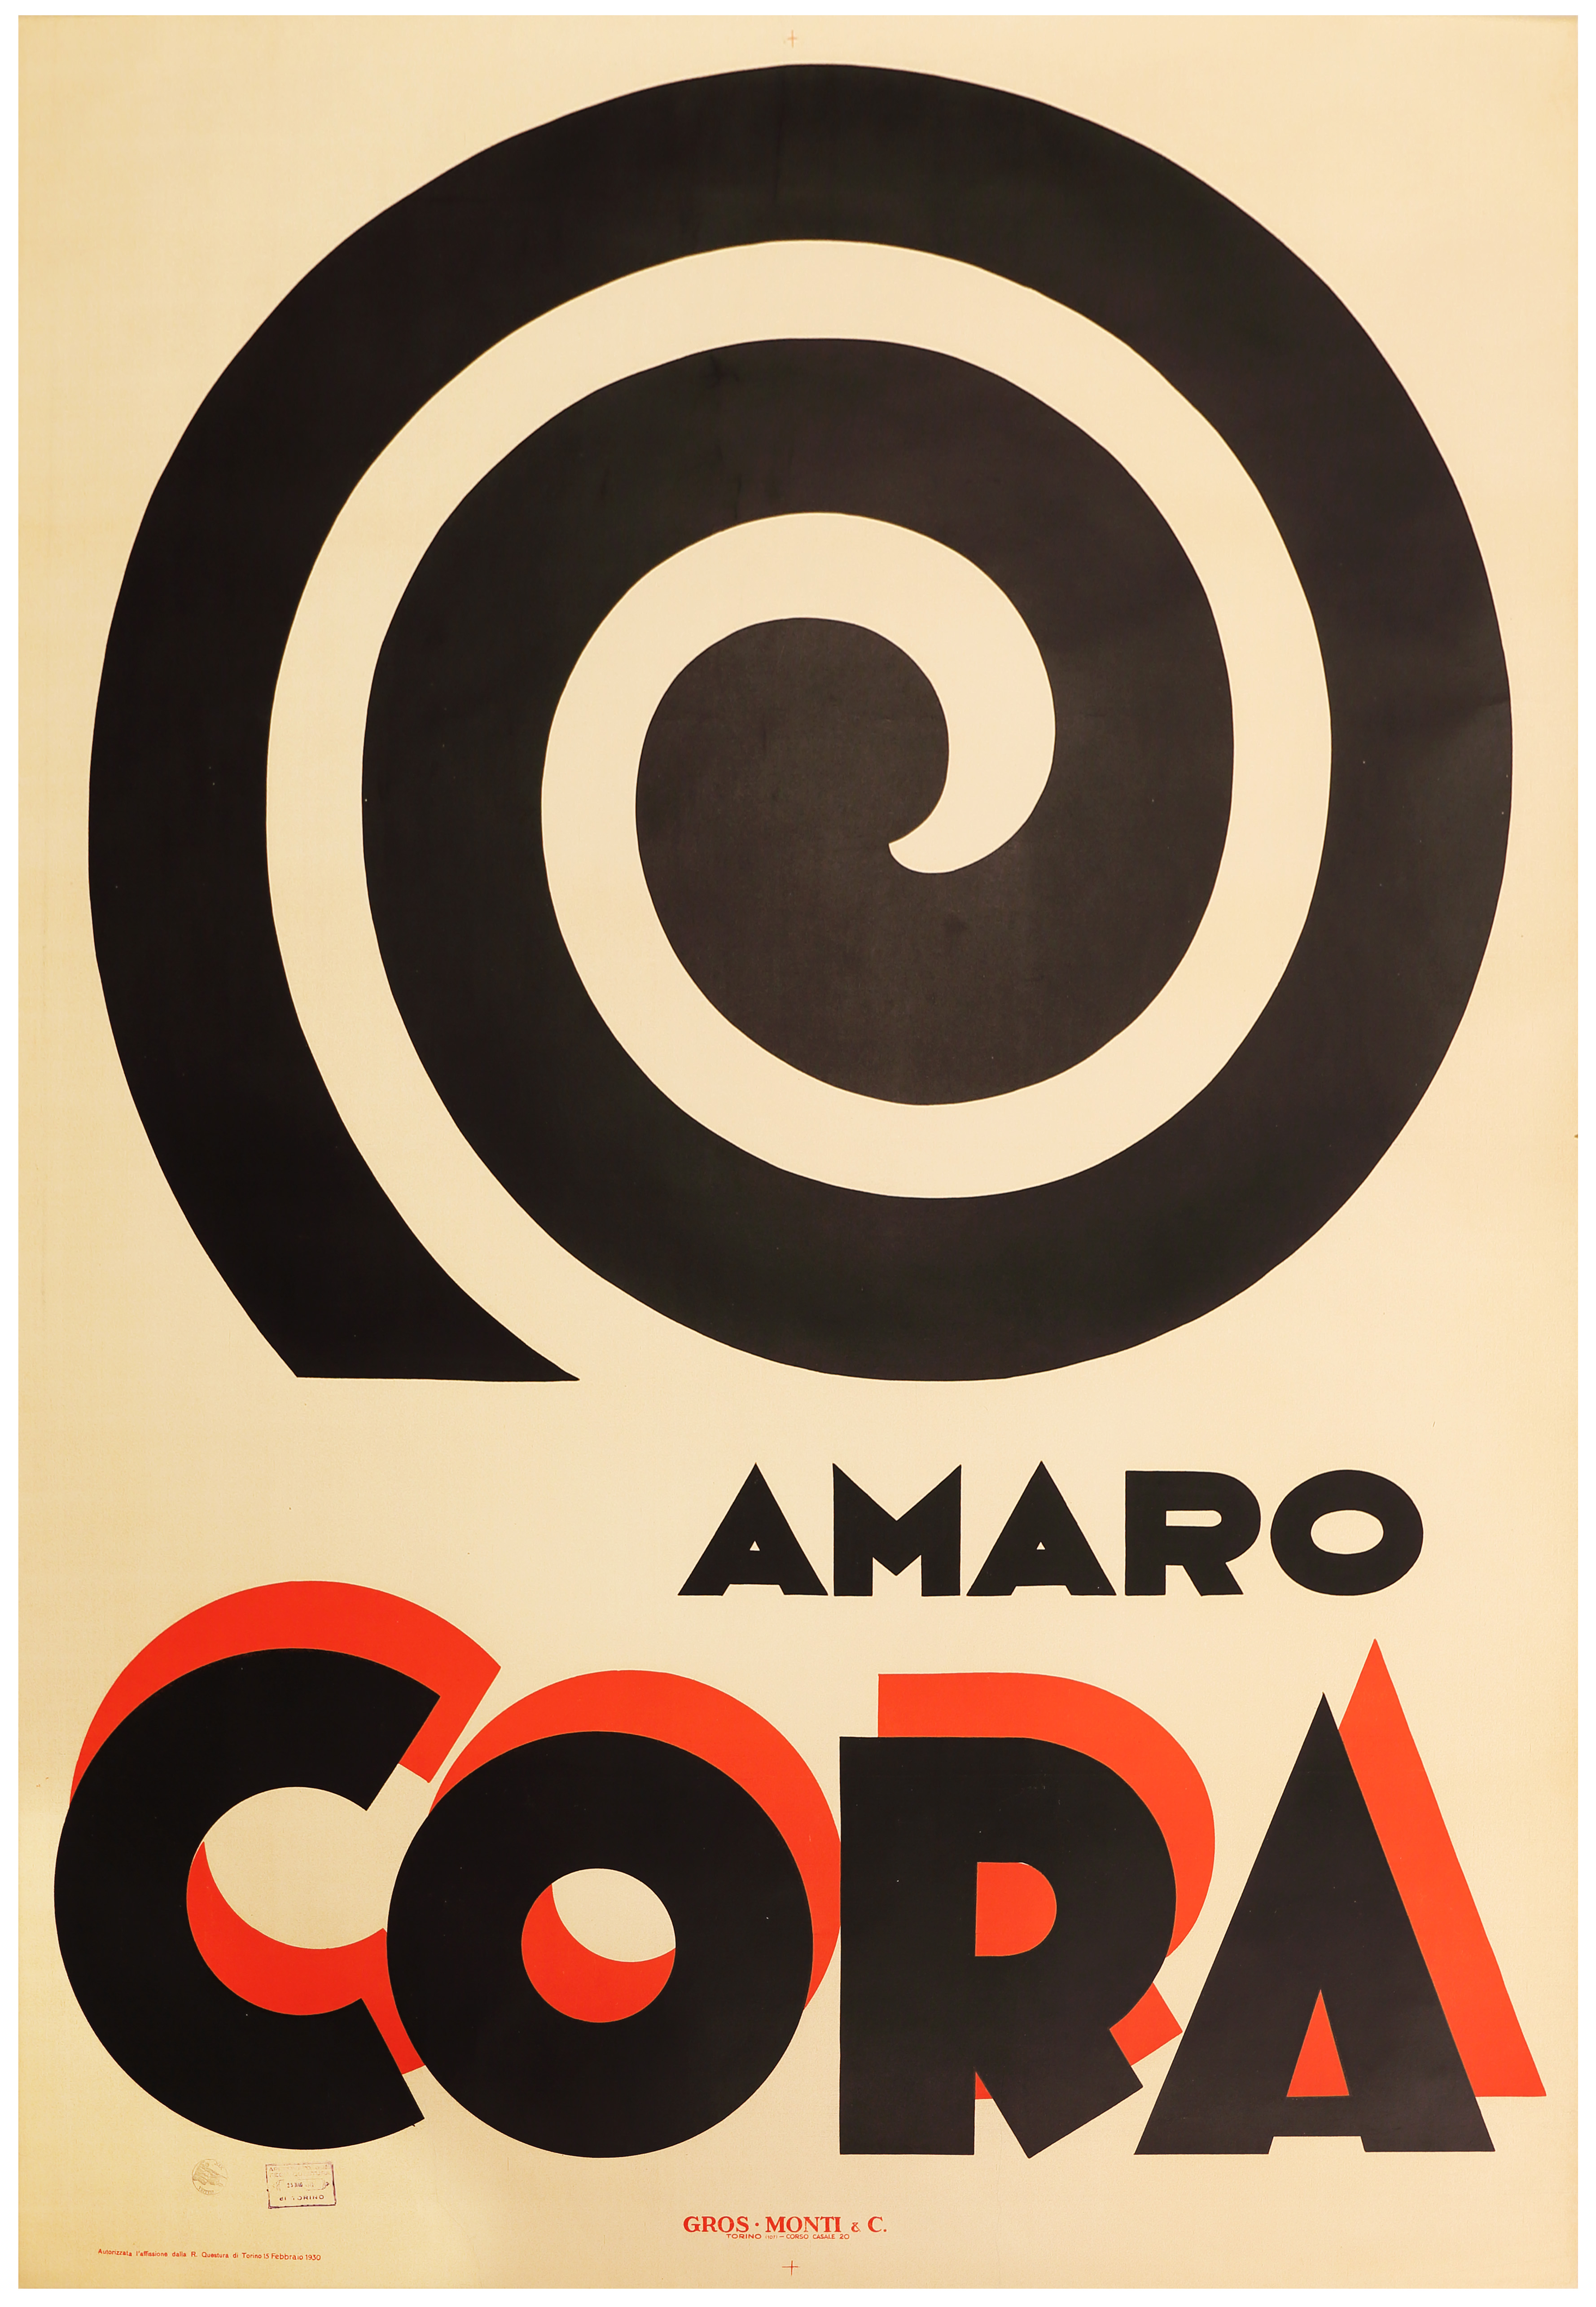 Amaro Cora poster